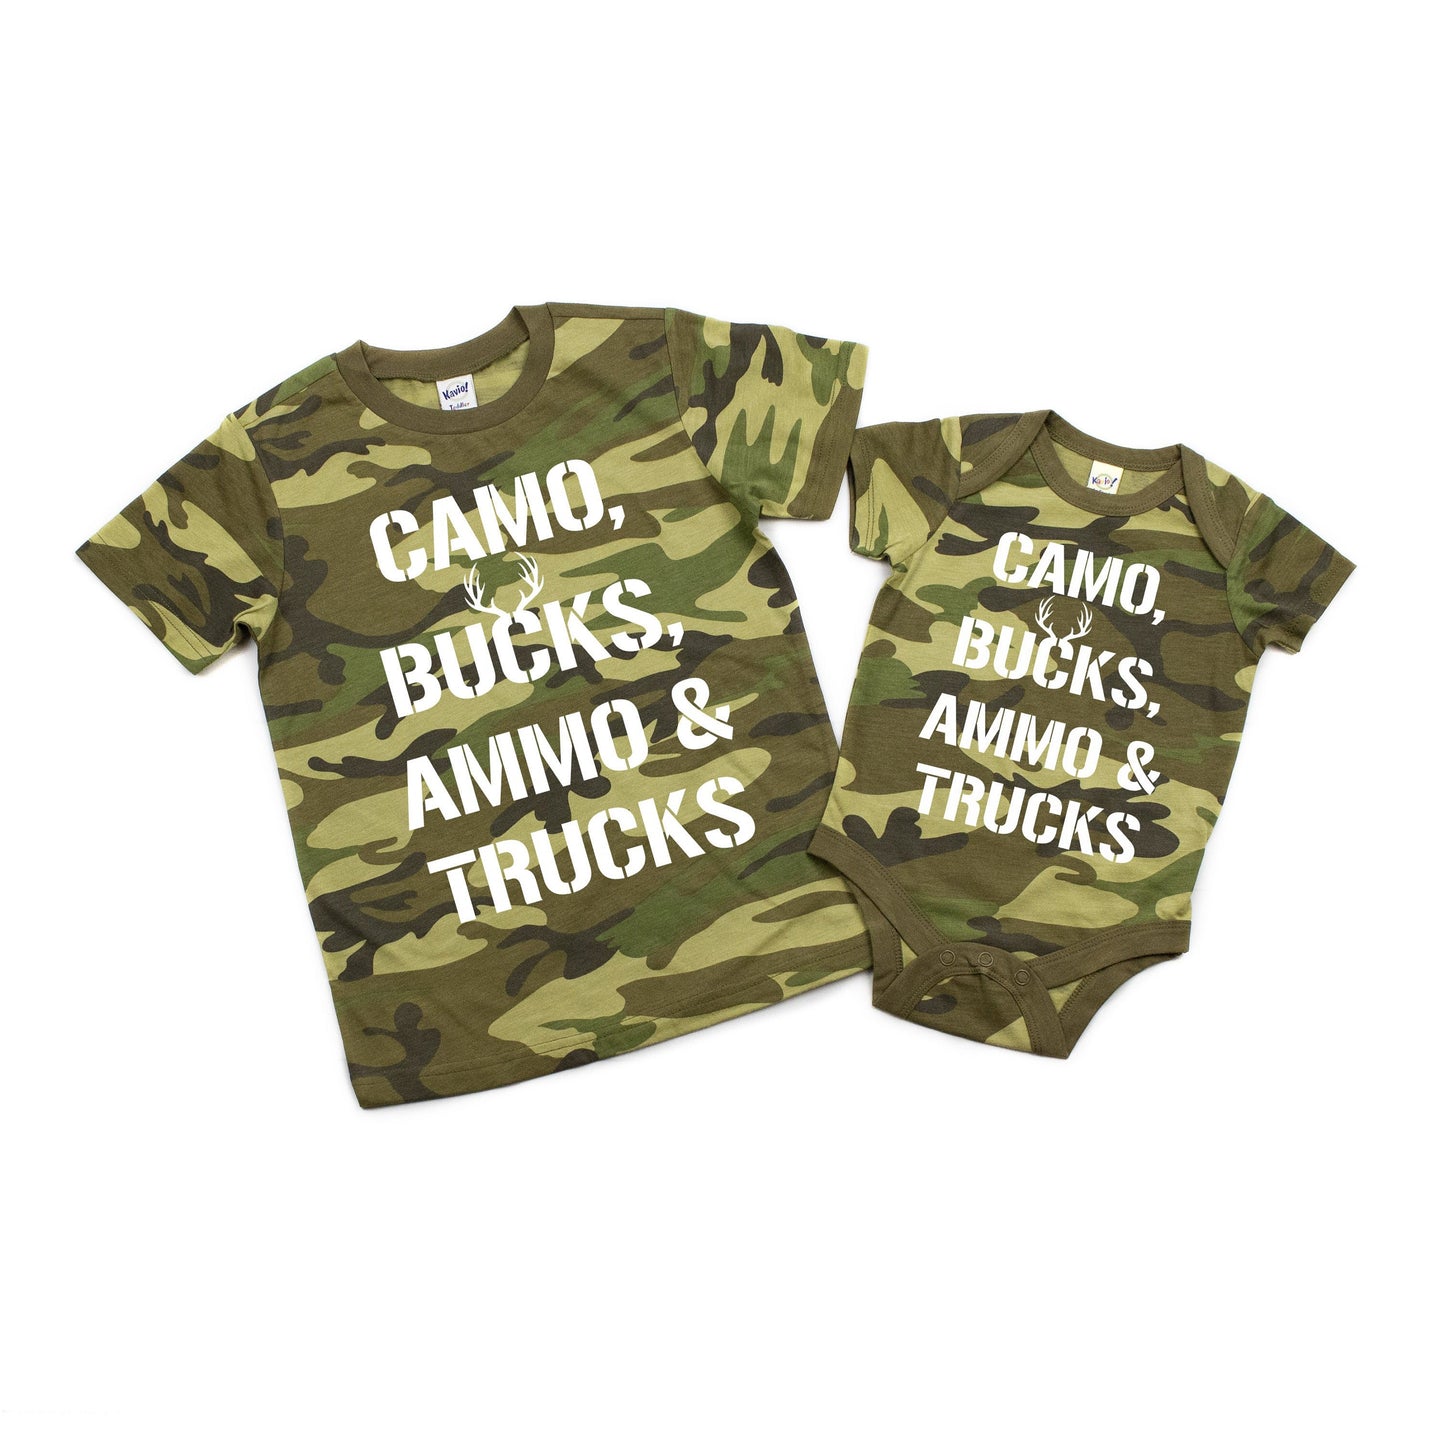 Camo Bucks Ammo Trucks Infant or Youth Shirt or Bodysuit - Toddler Boy Shirt - Hunting Shirts for Kids - 2nd Amendment Shirt for Kids